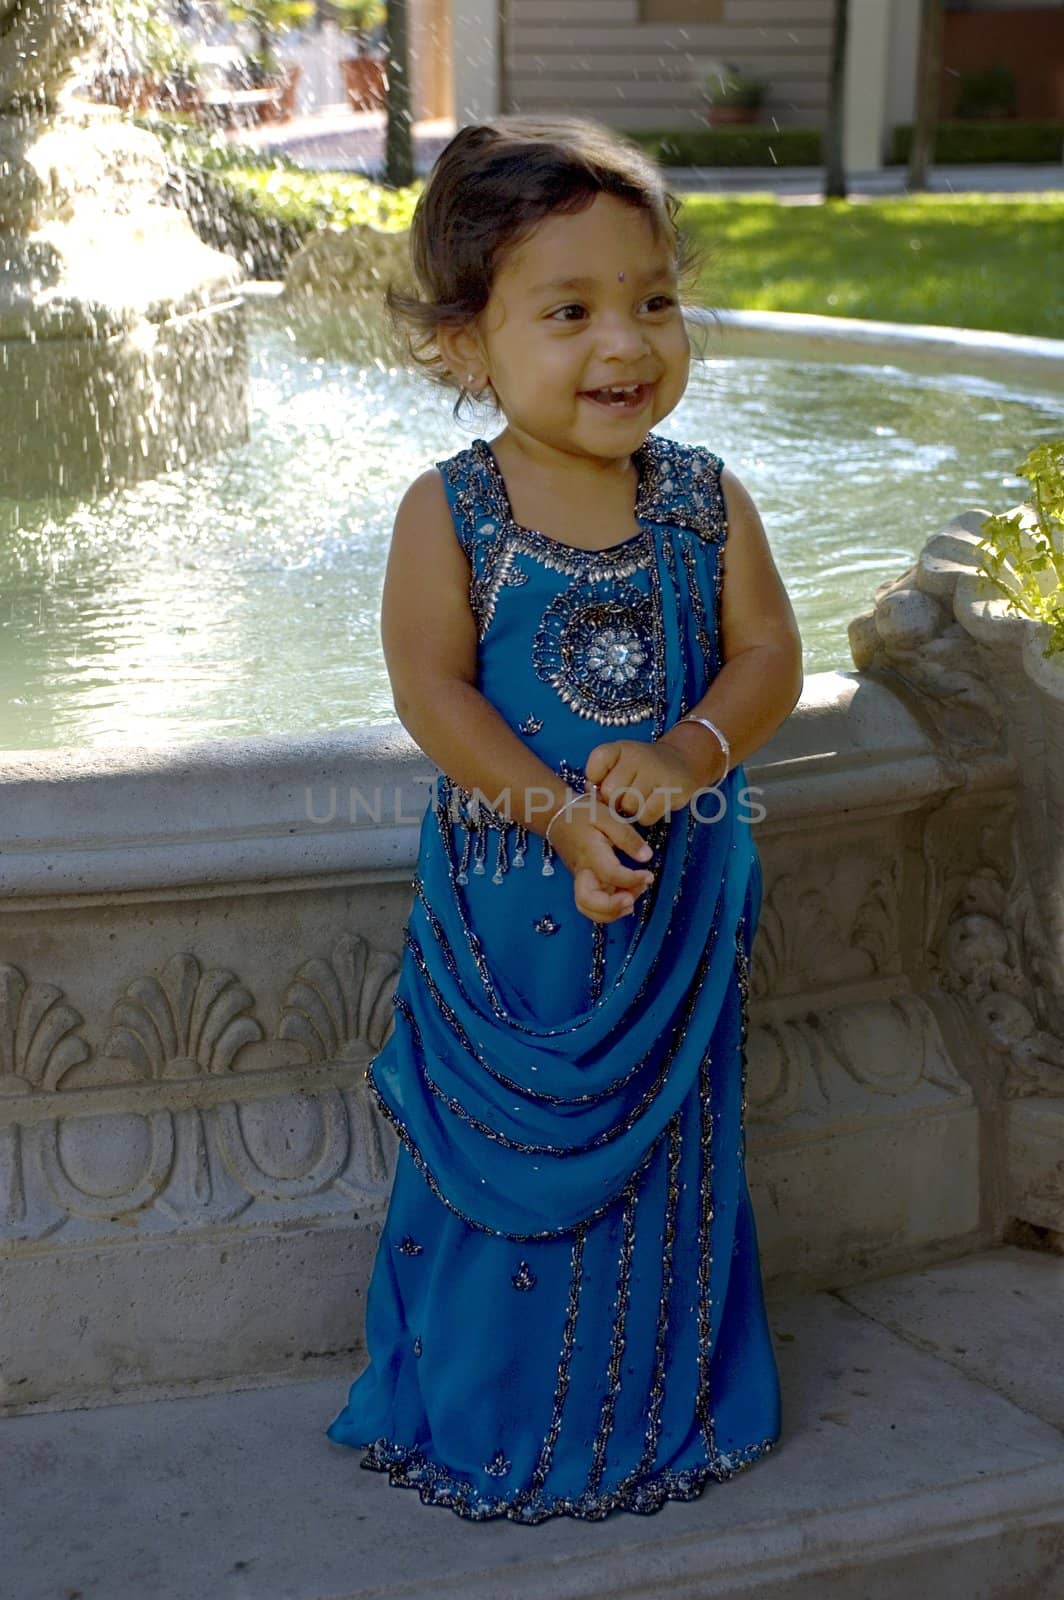 Indian Girl at Fountain by suwanneeredhead